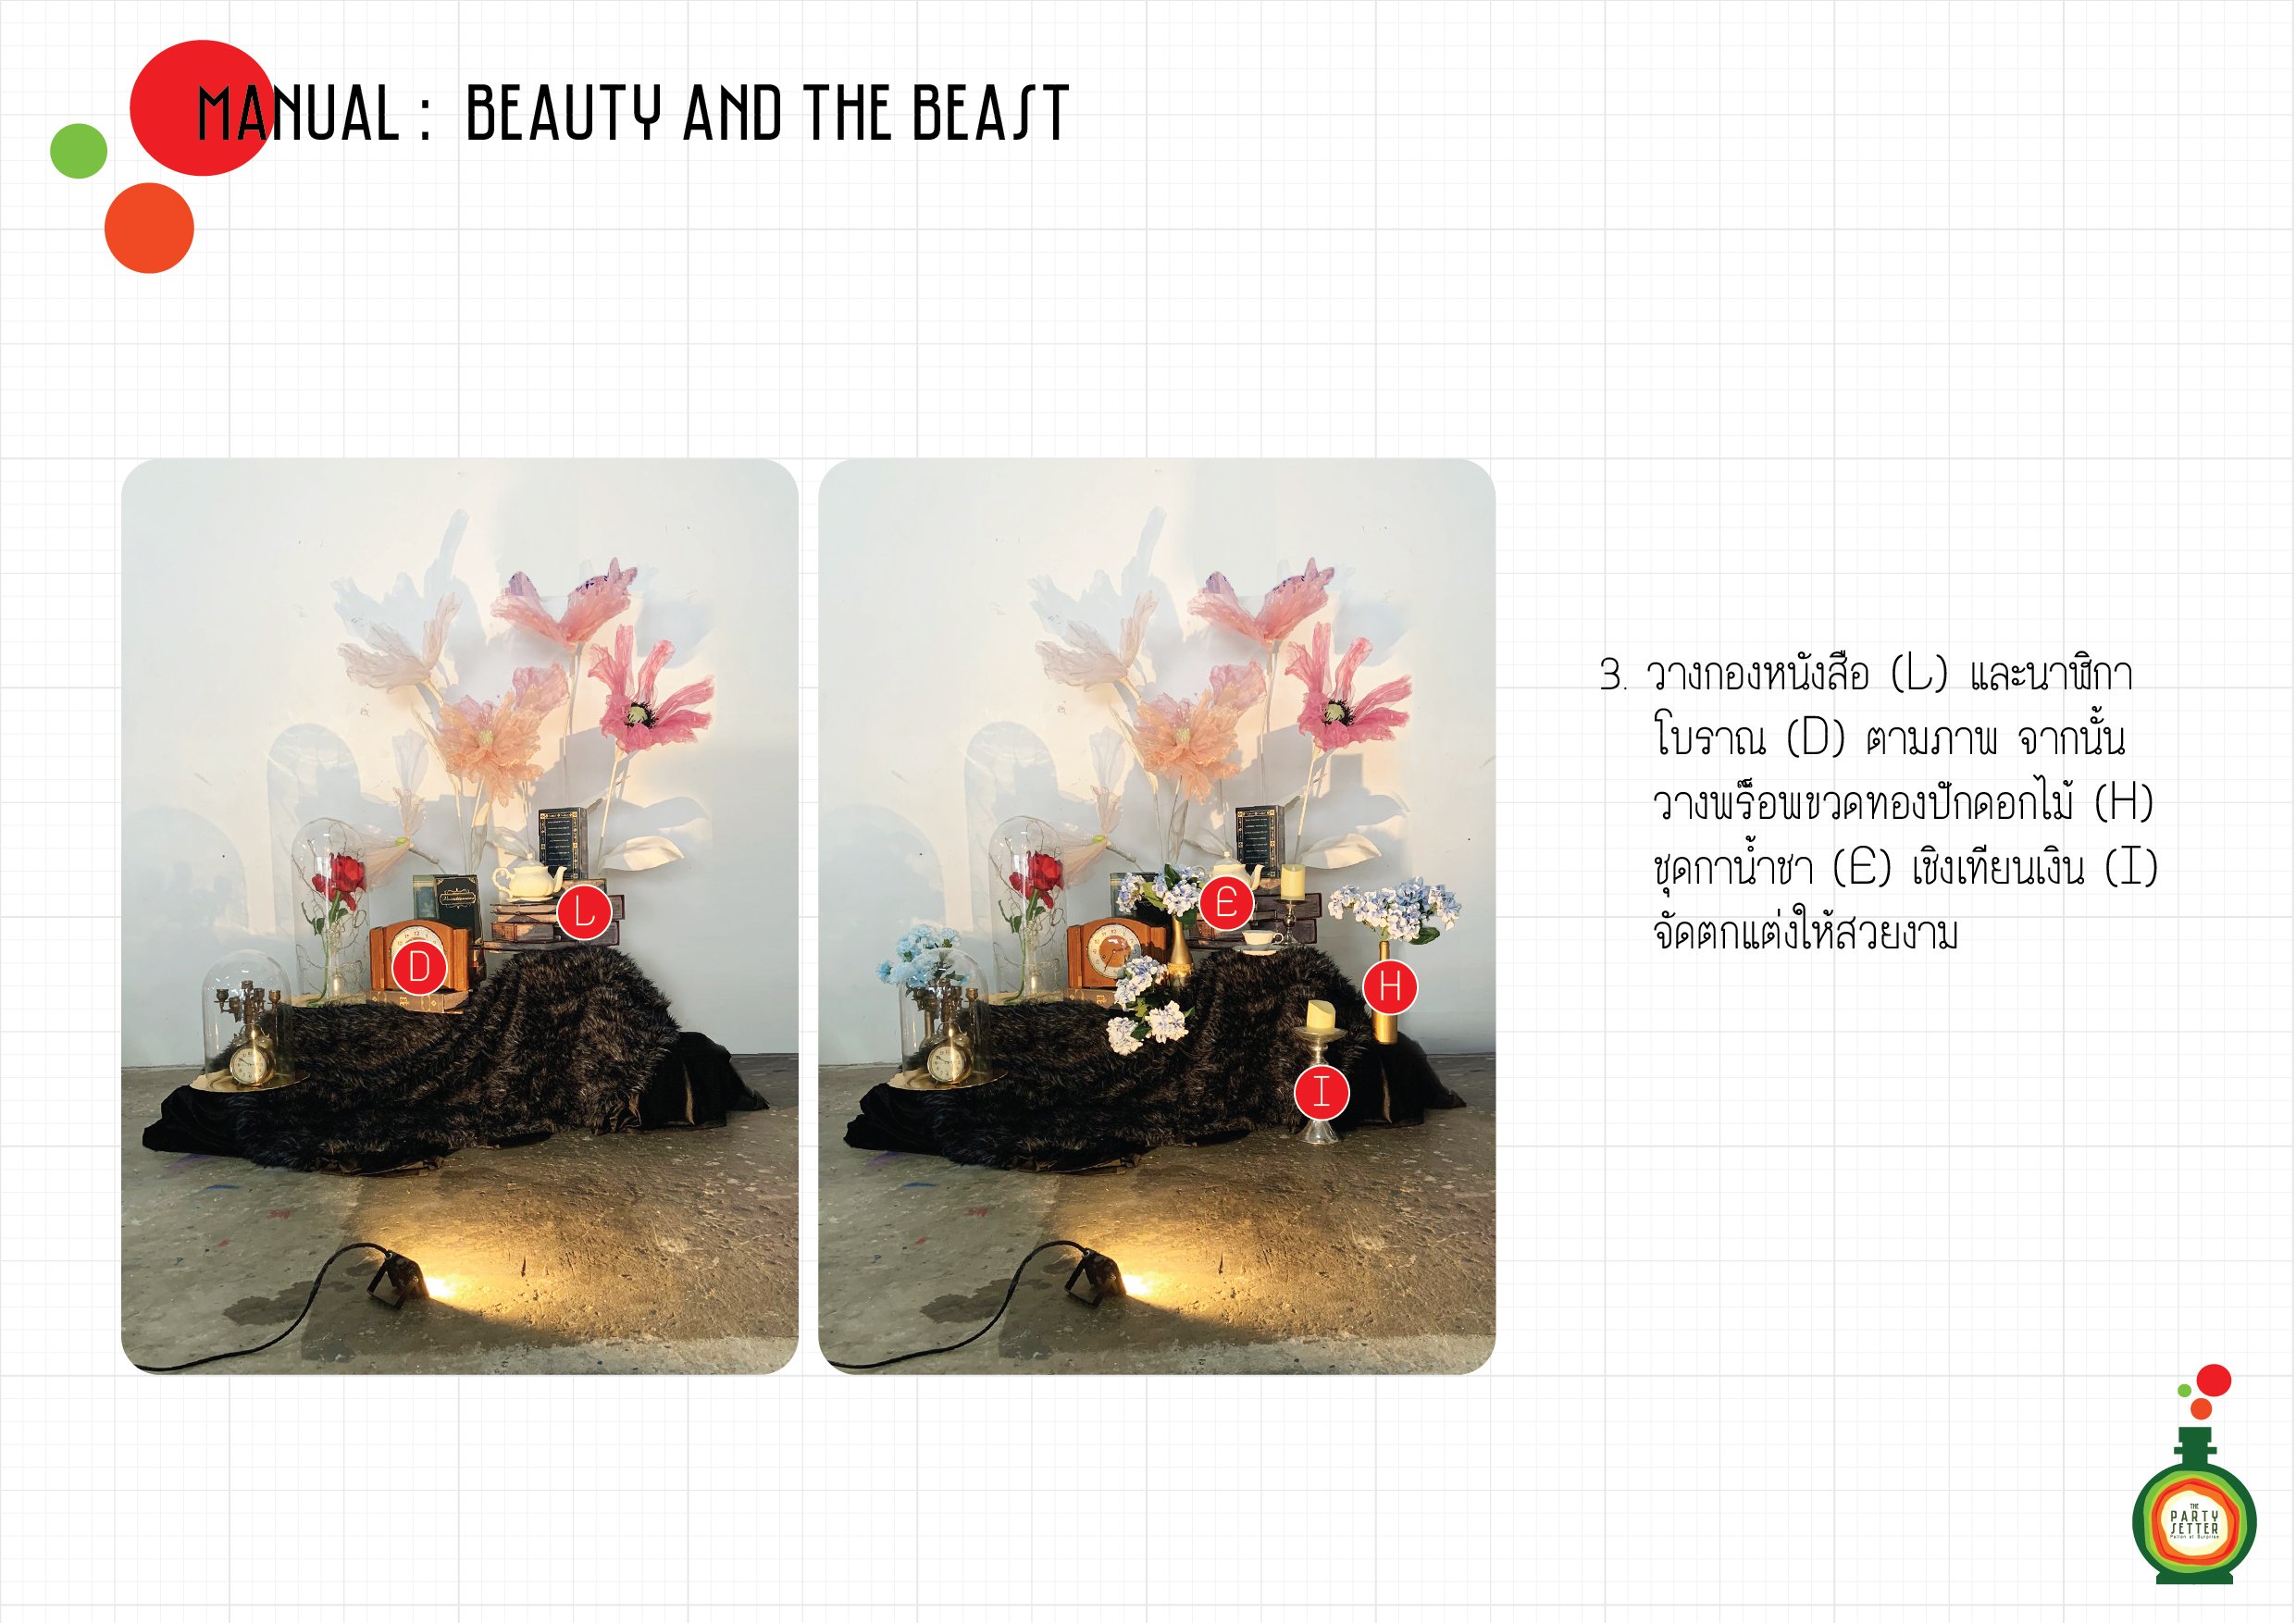 Manual_Beauty and the Beast-03-01.jpg